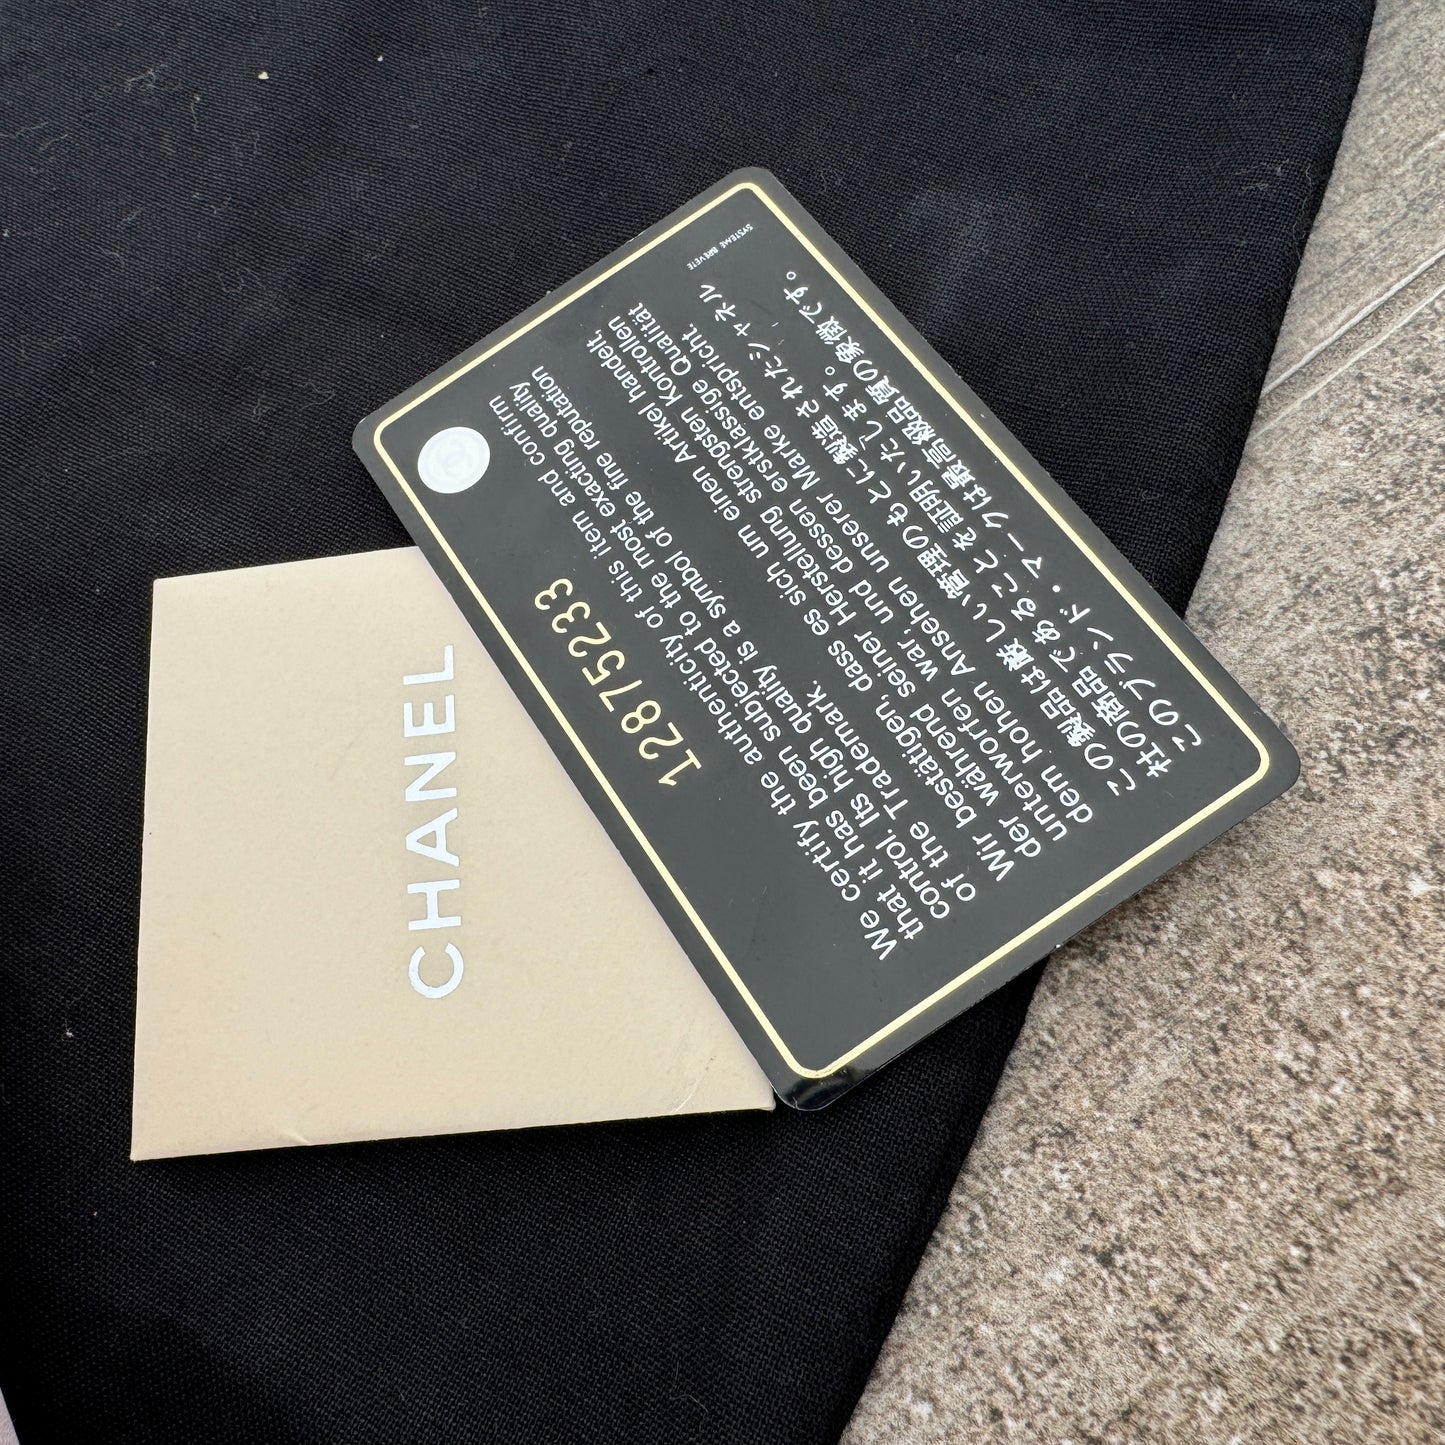 Chanel Reissue 226 Double Flap Calfskin Shoulder Bag